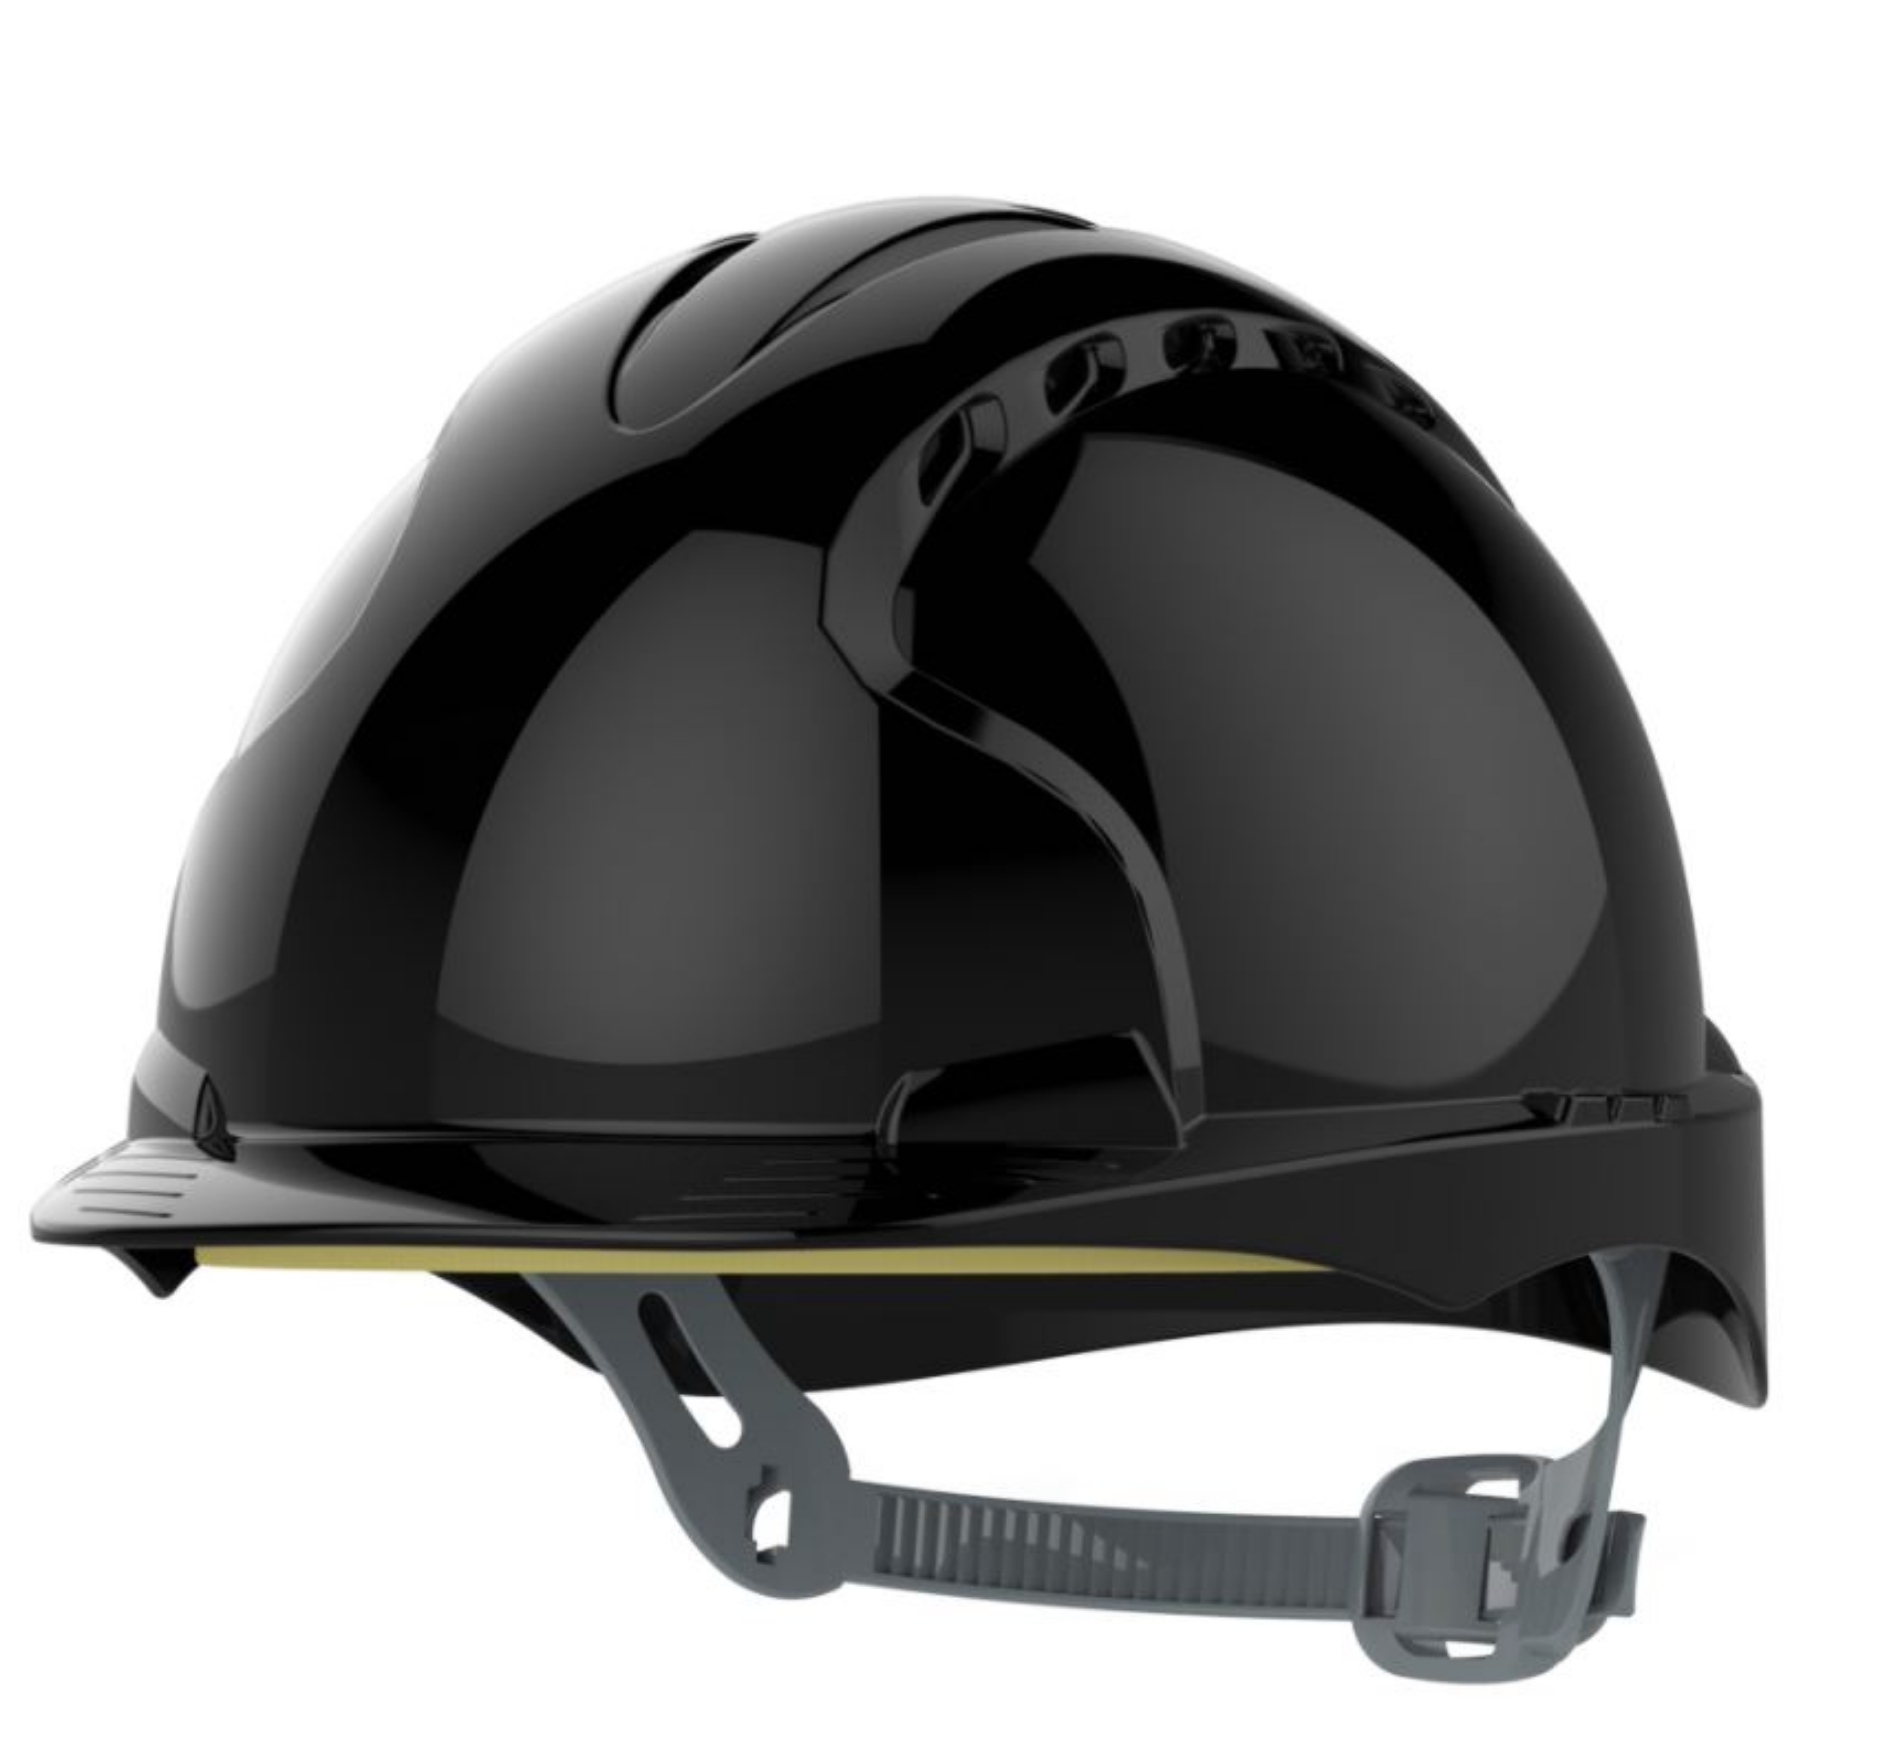 JSP EVO 3 Black Safety Helmet